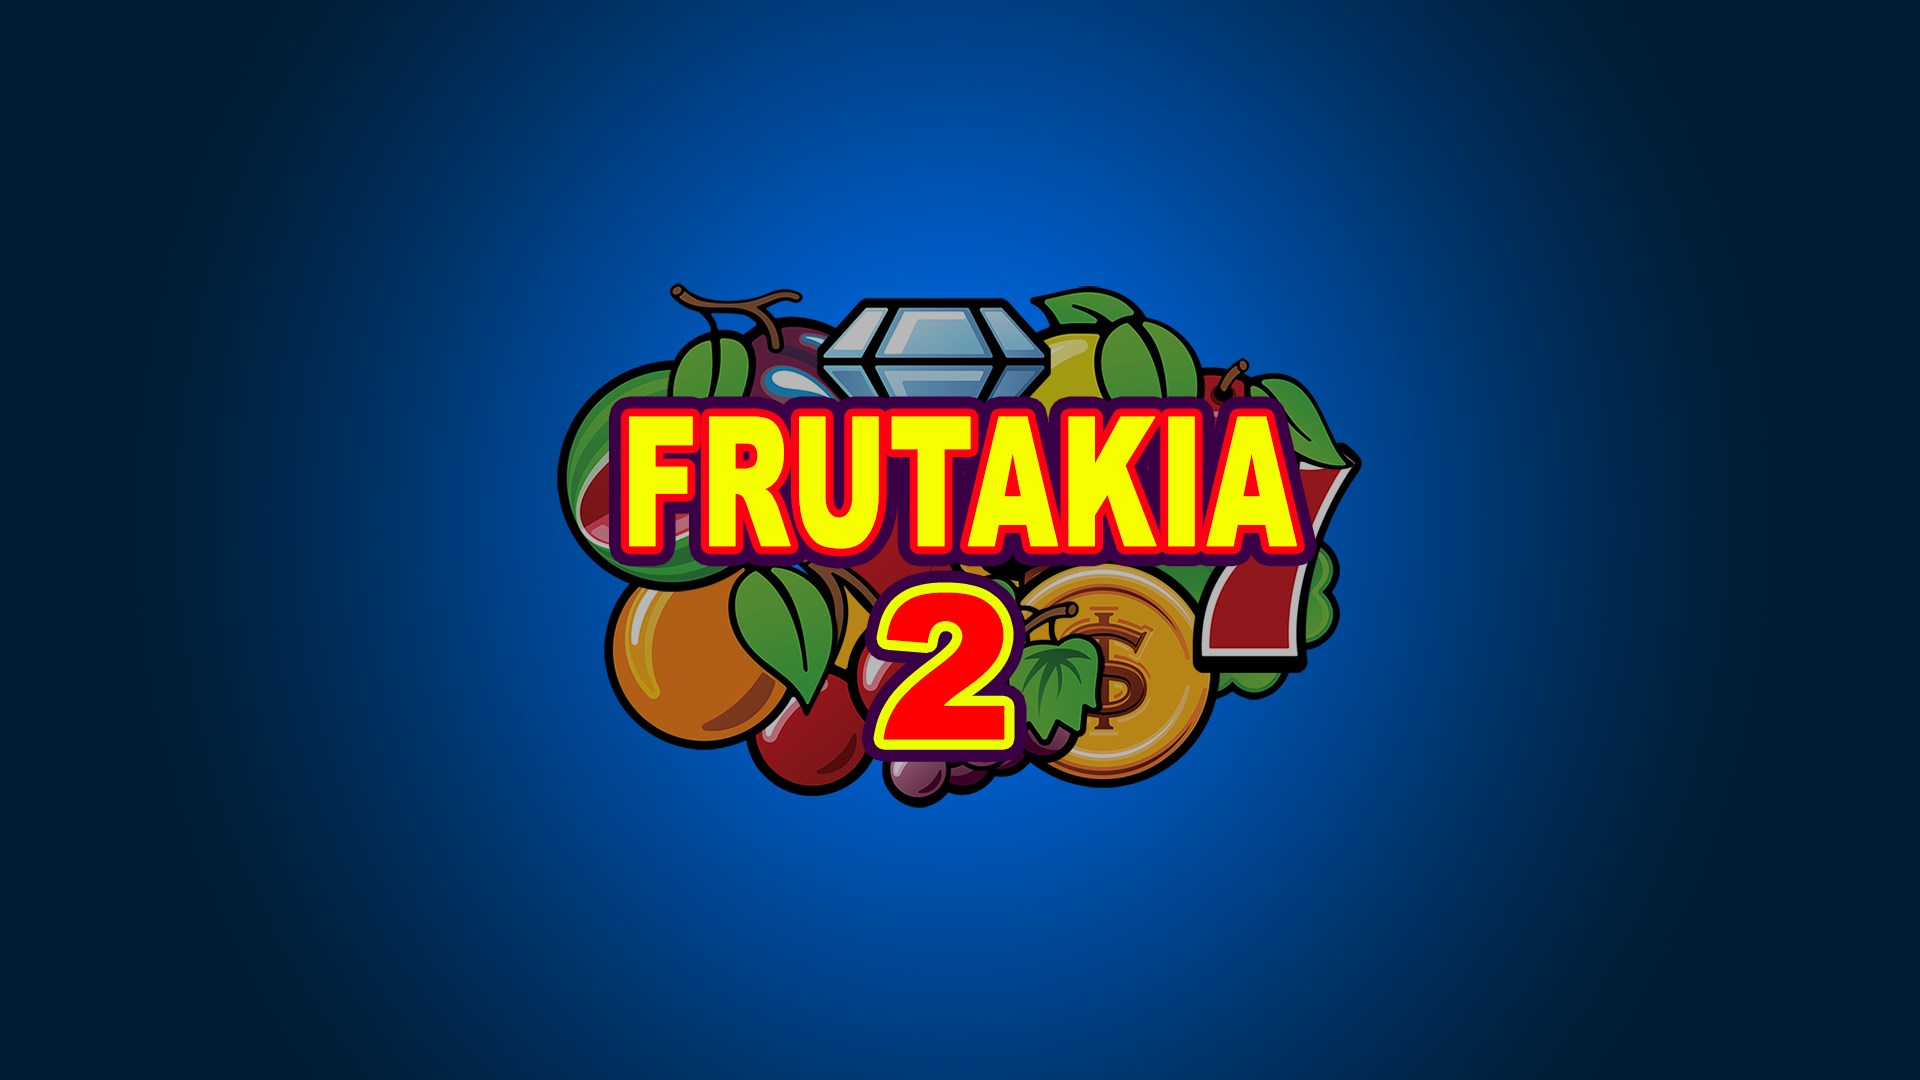 Find the best laptops for Frutakia 2